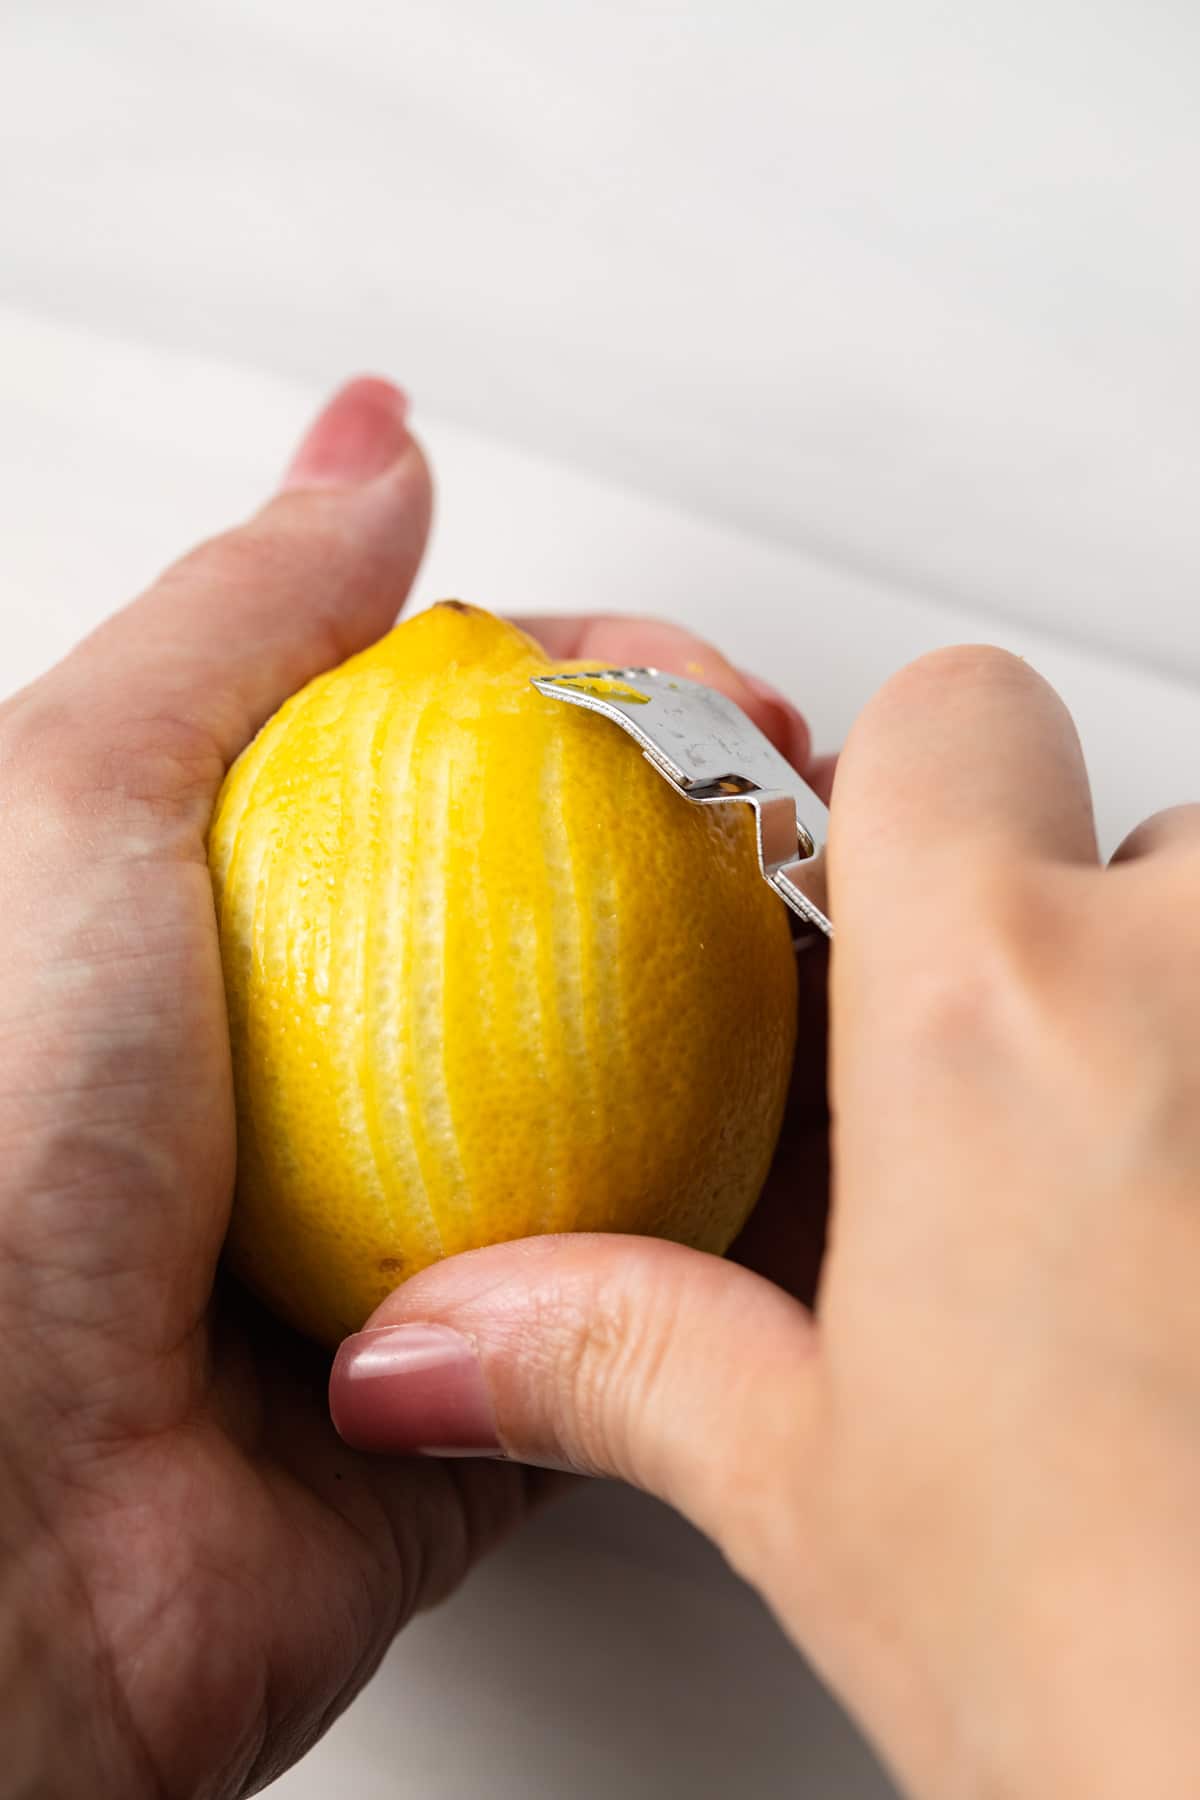 Zesting a lemon with a lemon zester.